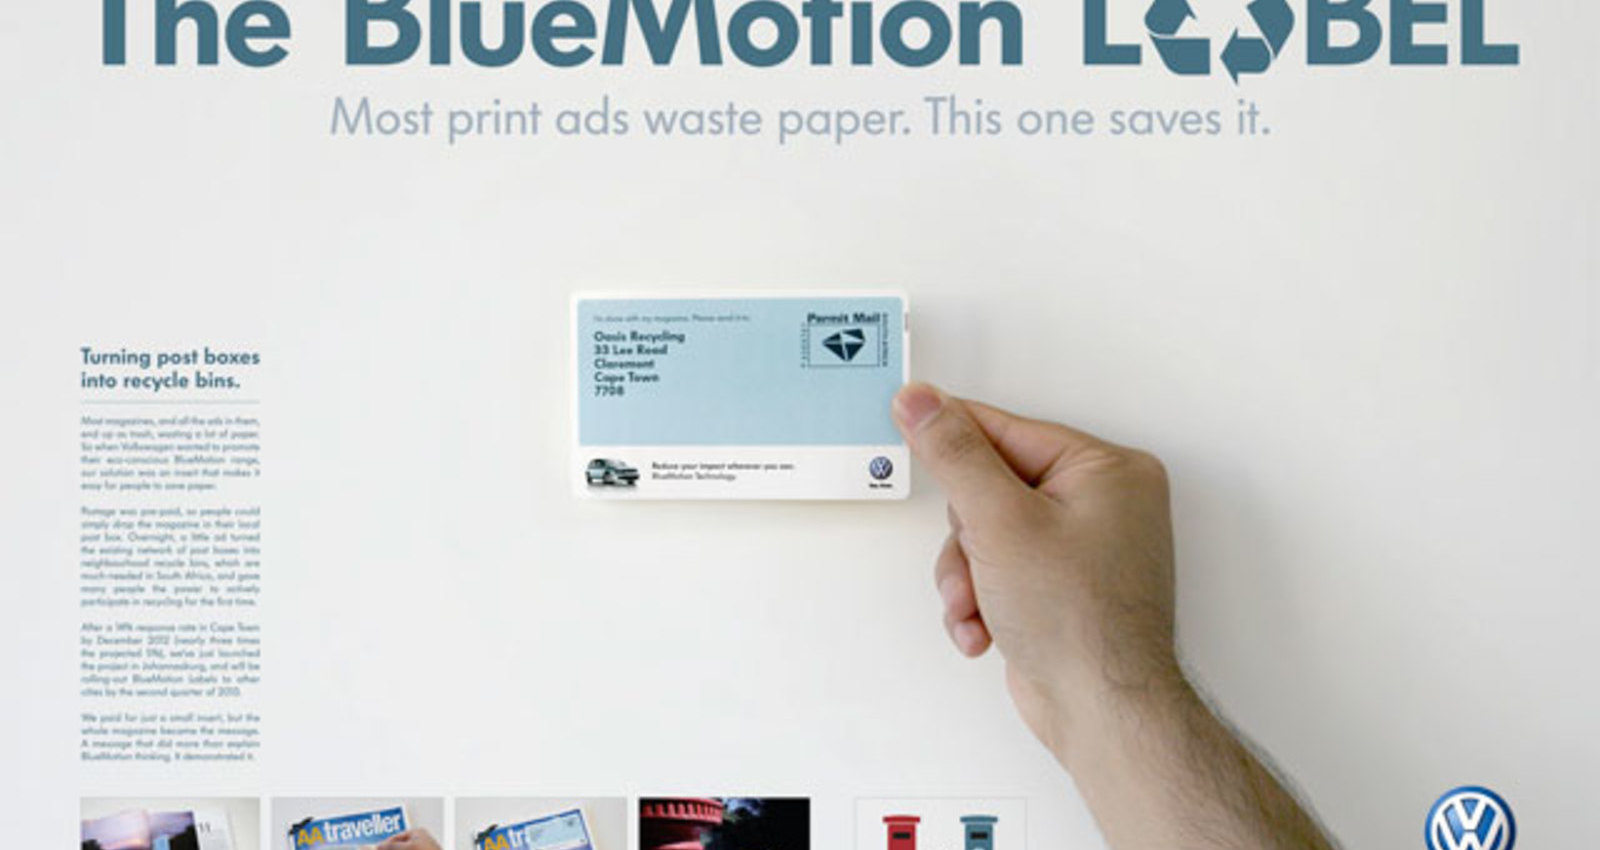 The BlueMotion Label